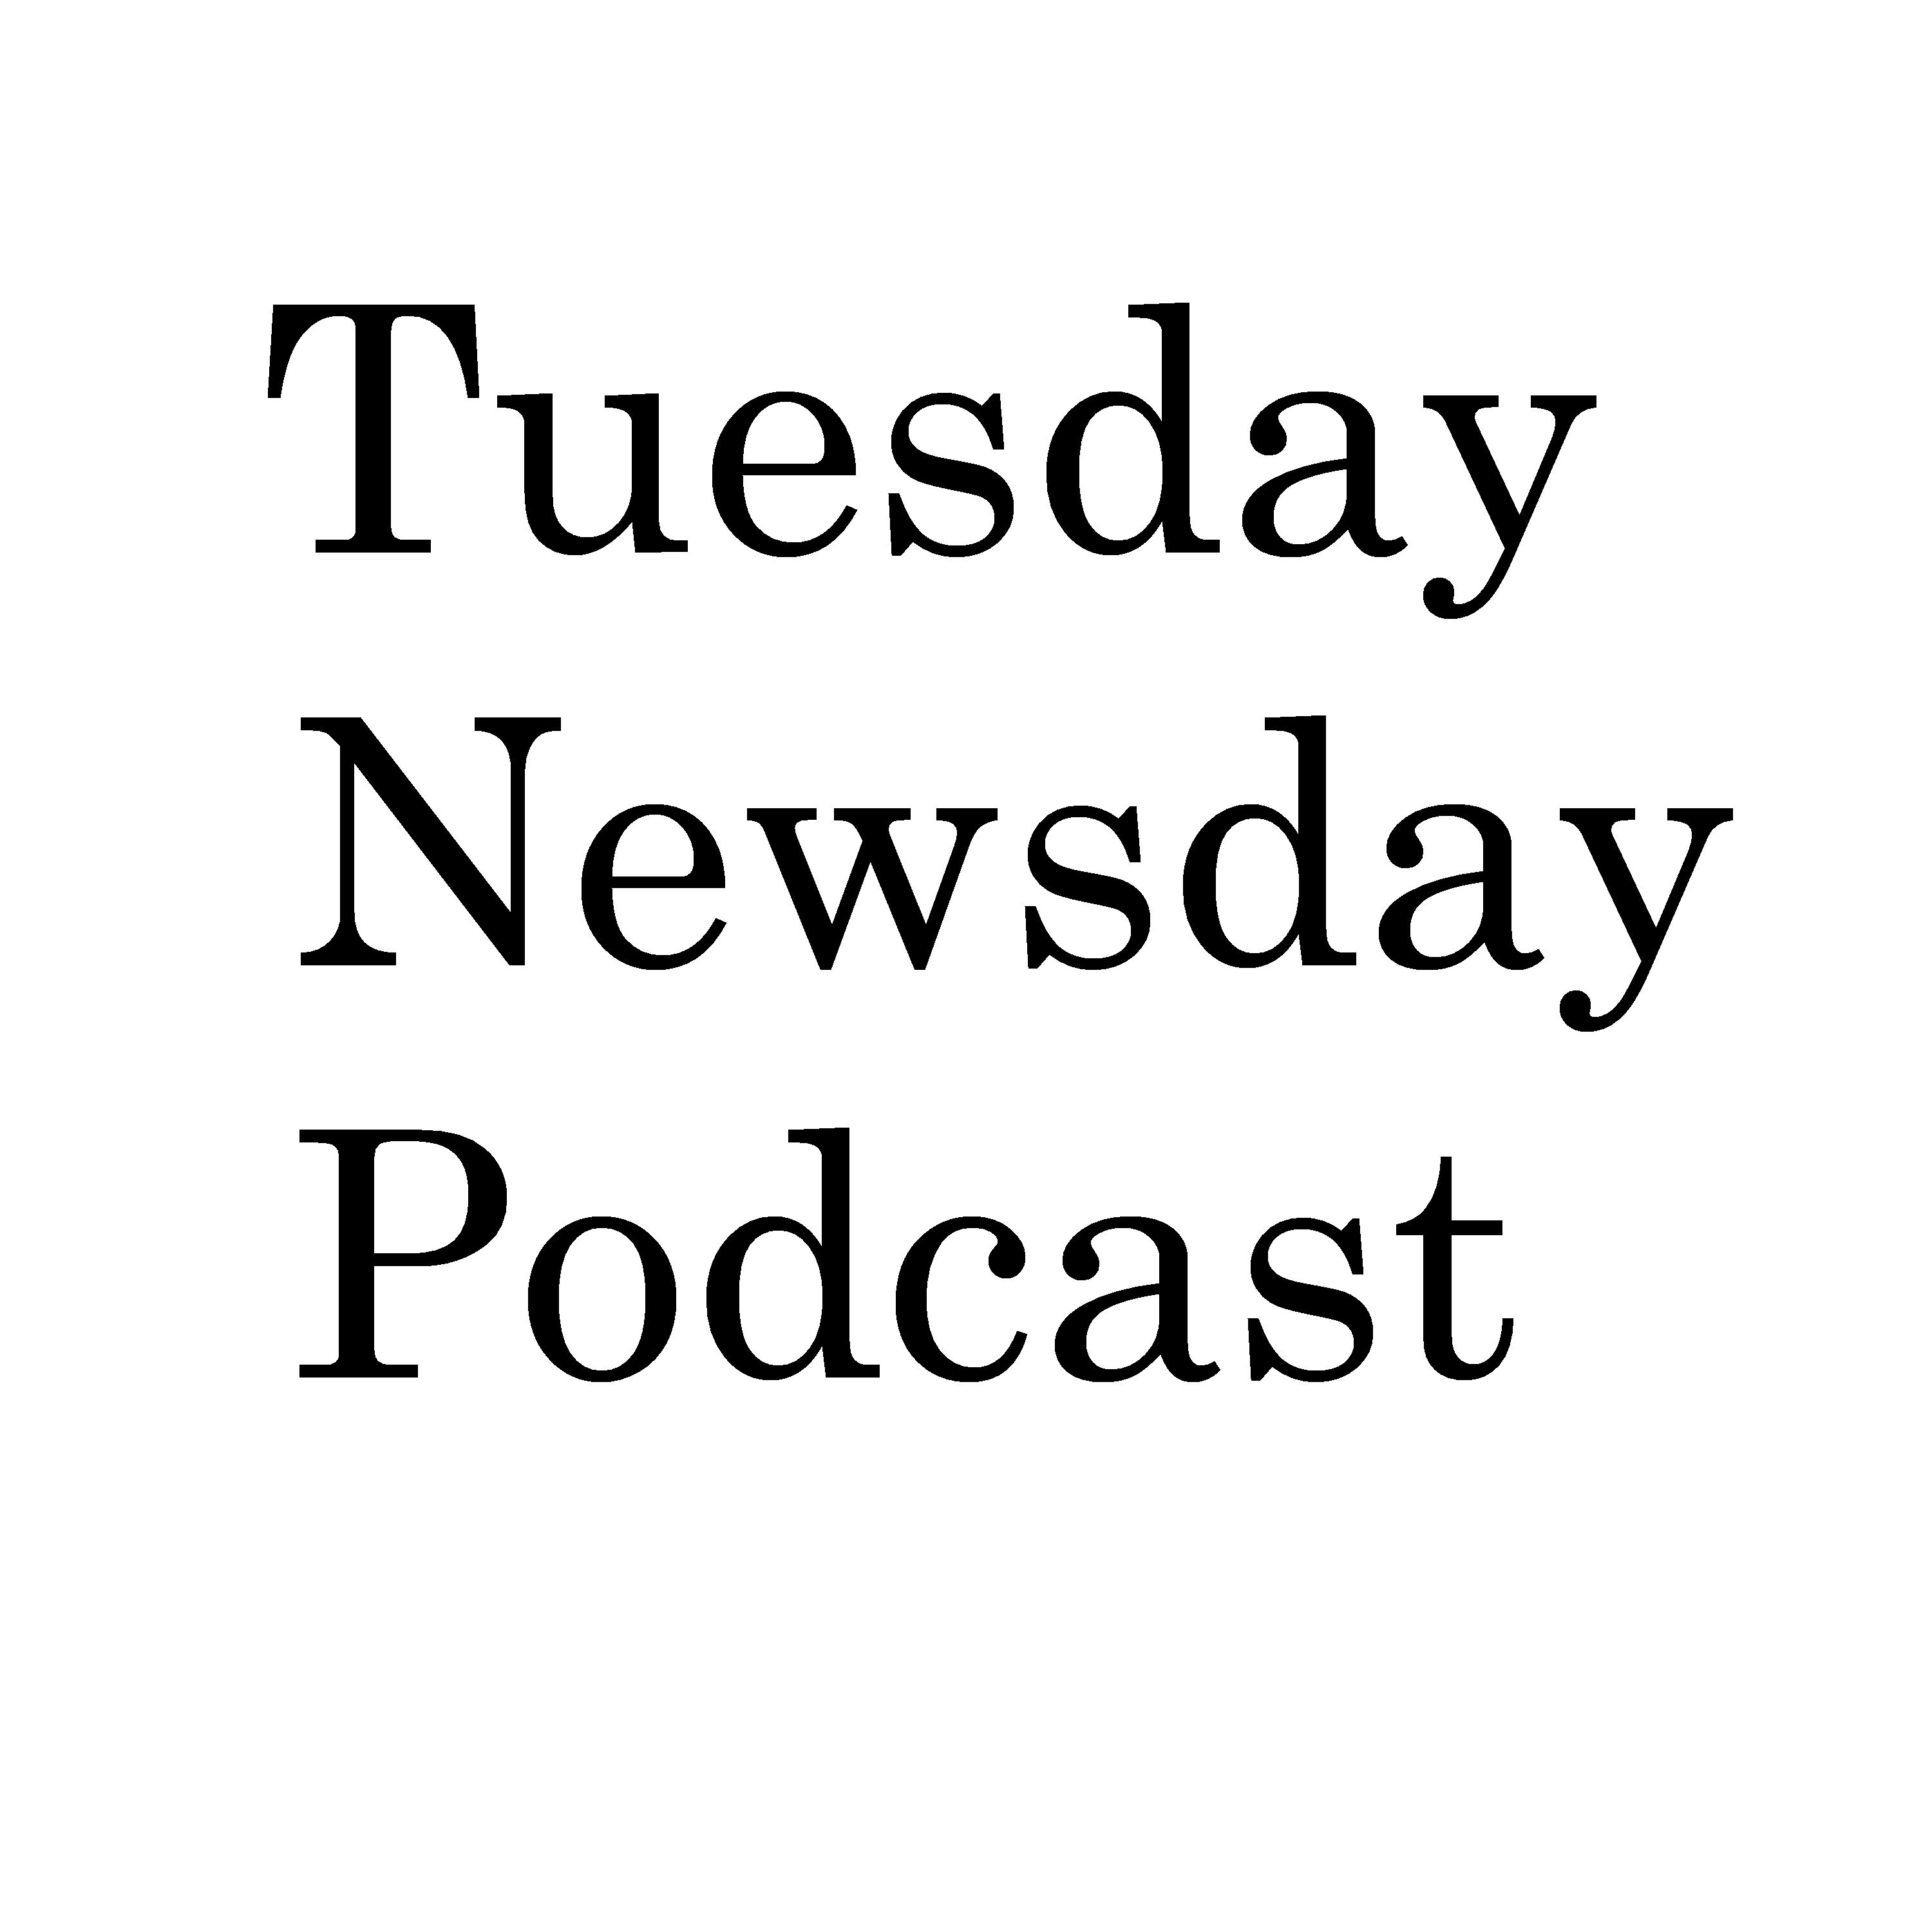 Tuesday Newsday Podcast